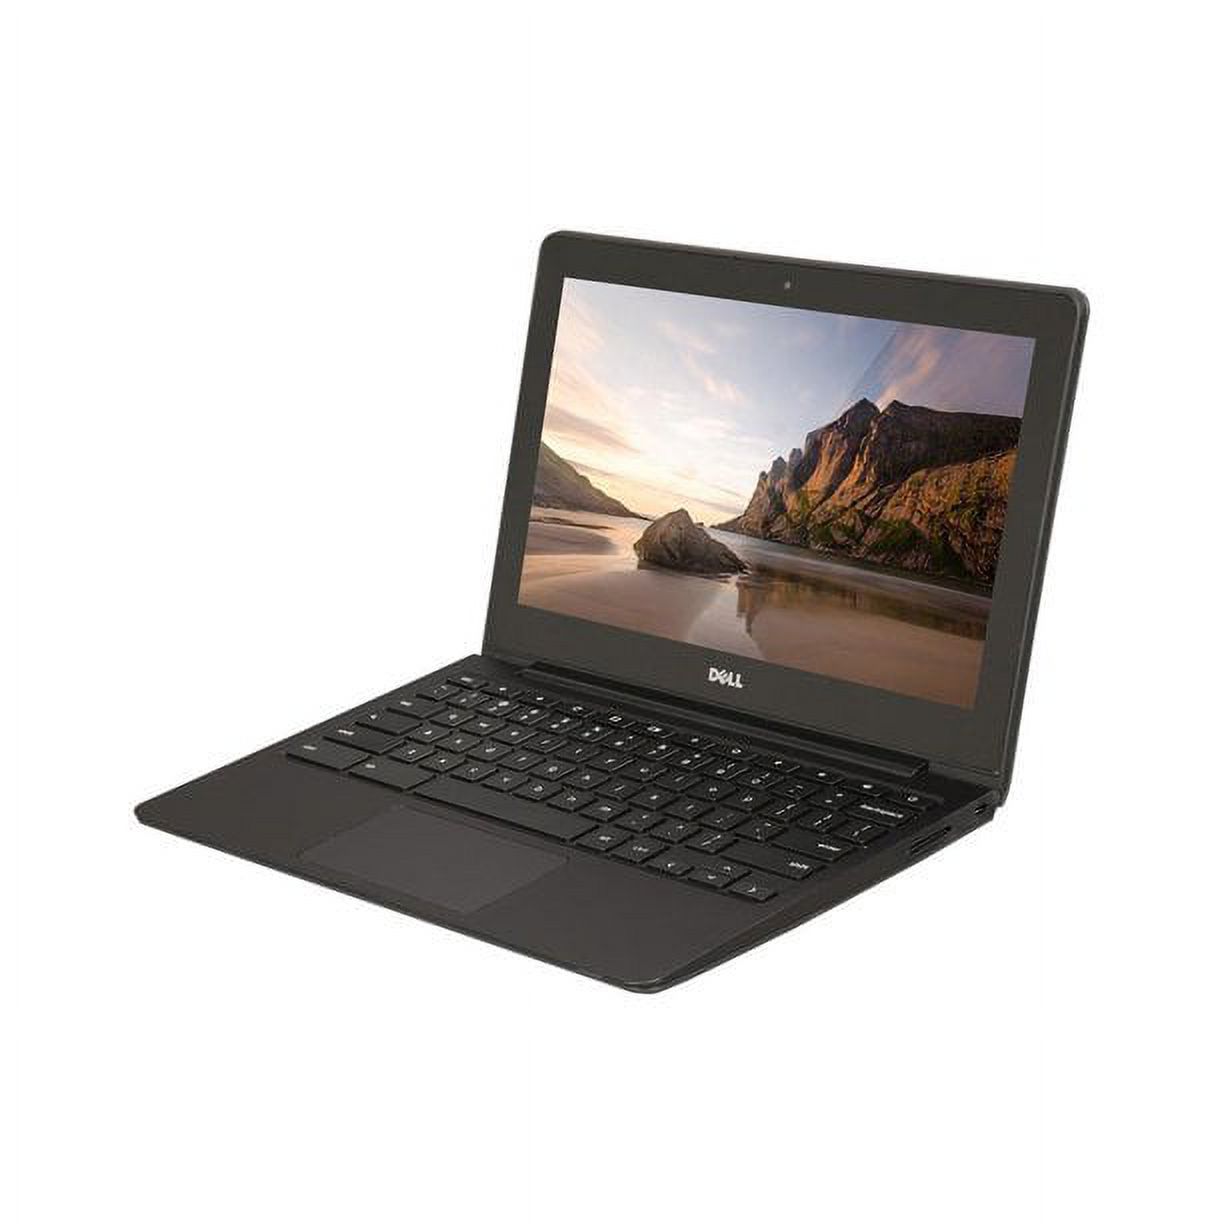 Restored Dell Chromebook 11 Cb1C13 Intel Celeron 1.60 GHz 16GB 2GB Ram Chrome OS (Refurbished) - image 1 of 4